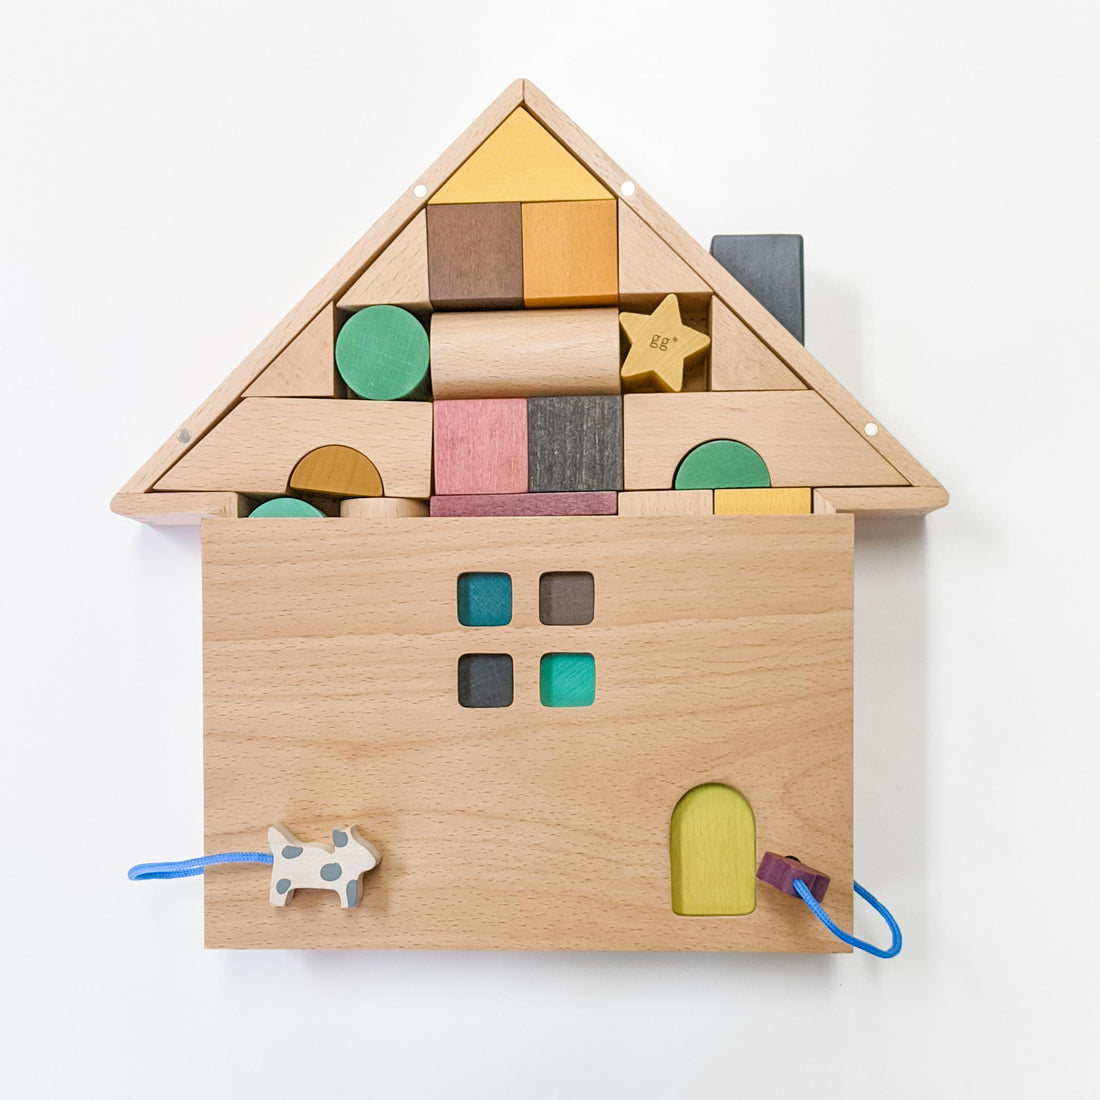 Tsumiki Building Blocks House-Wooden Toys-kiko+ & gg*-bluebird baby & kids